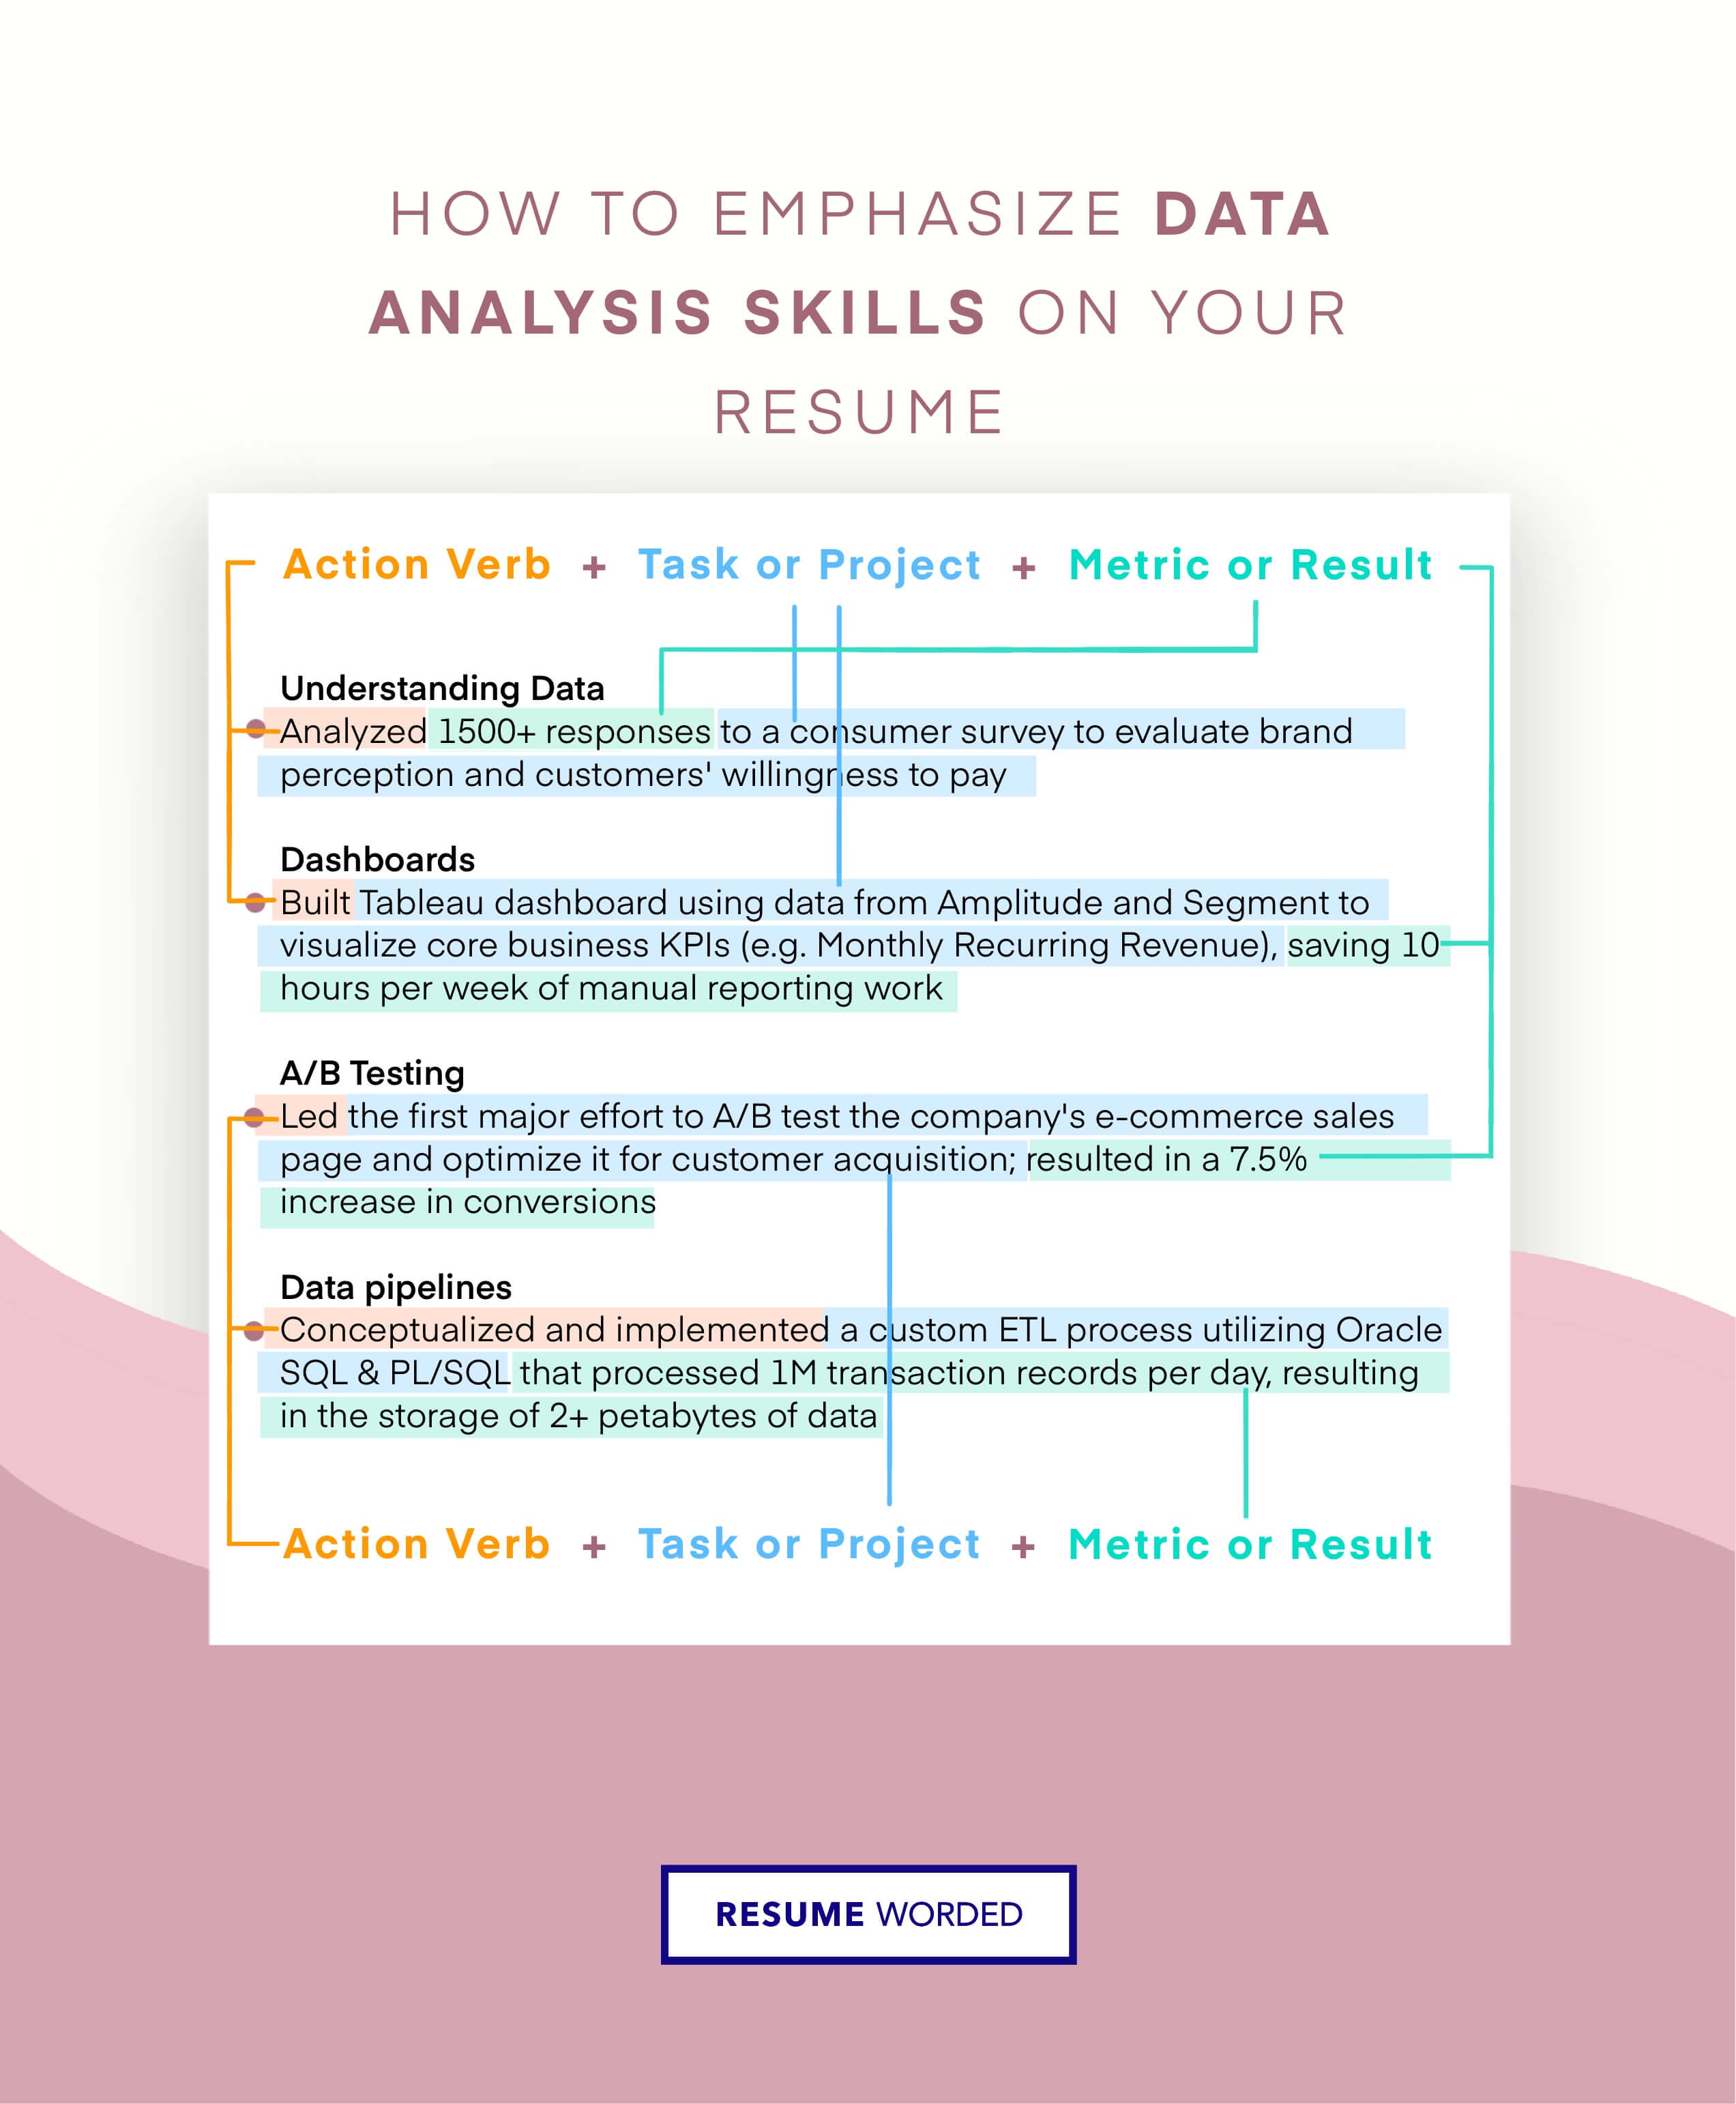 Showcase your abilities with data analysis - Digital Marketing Analyst Resume